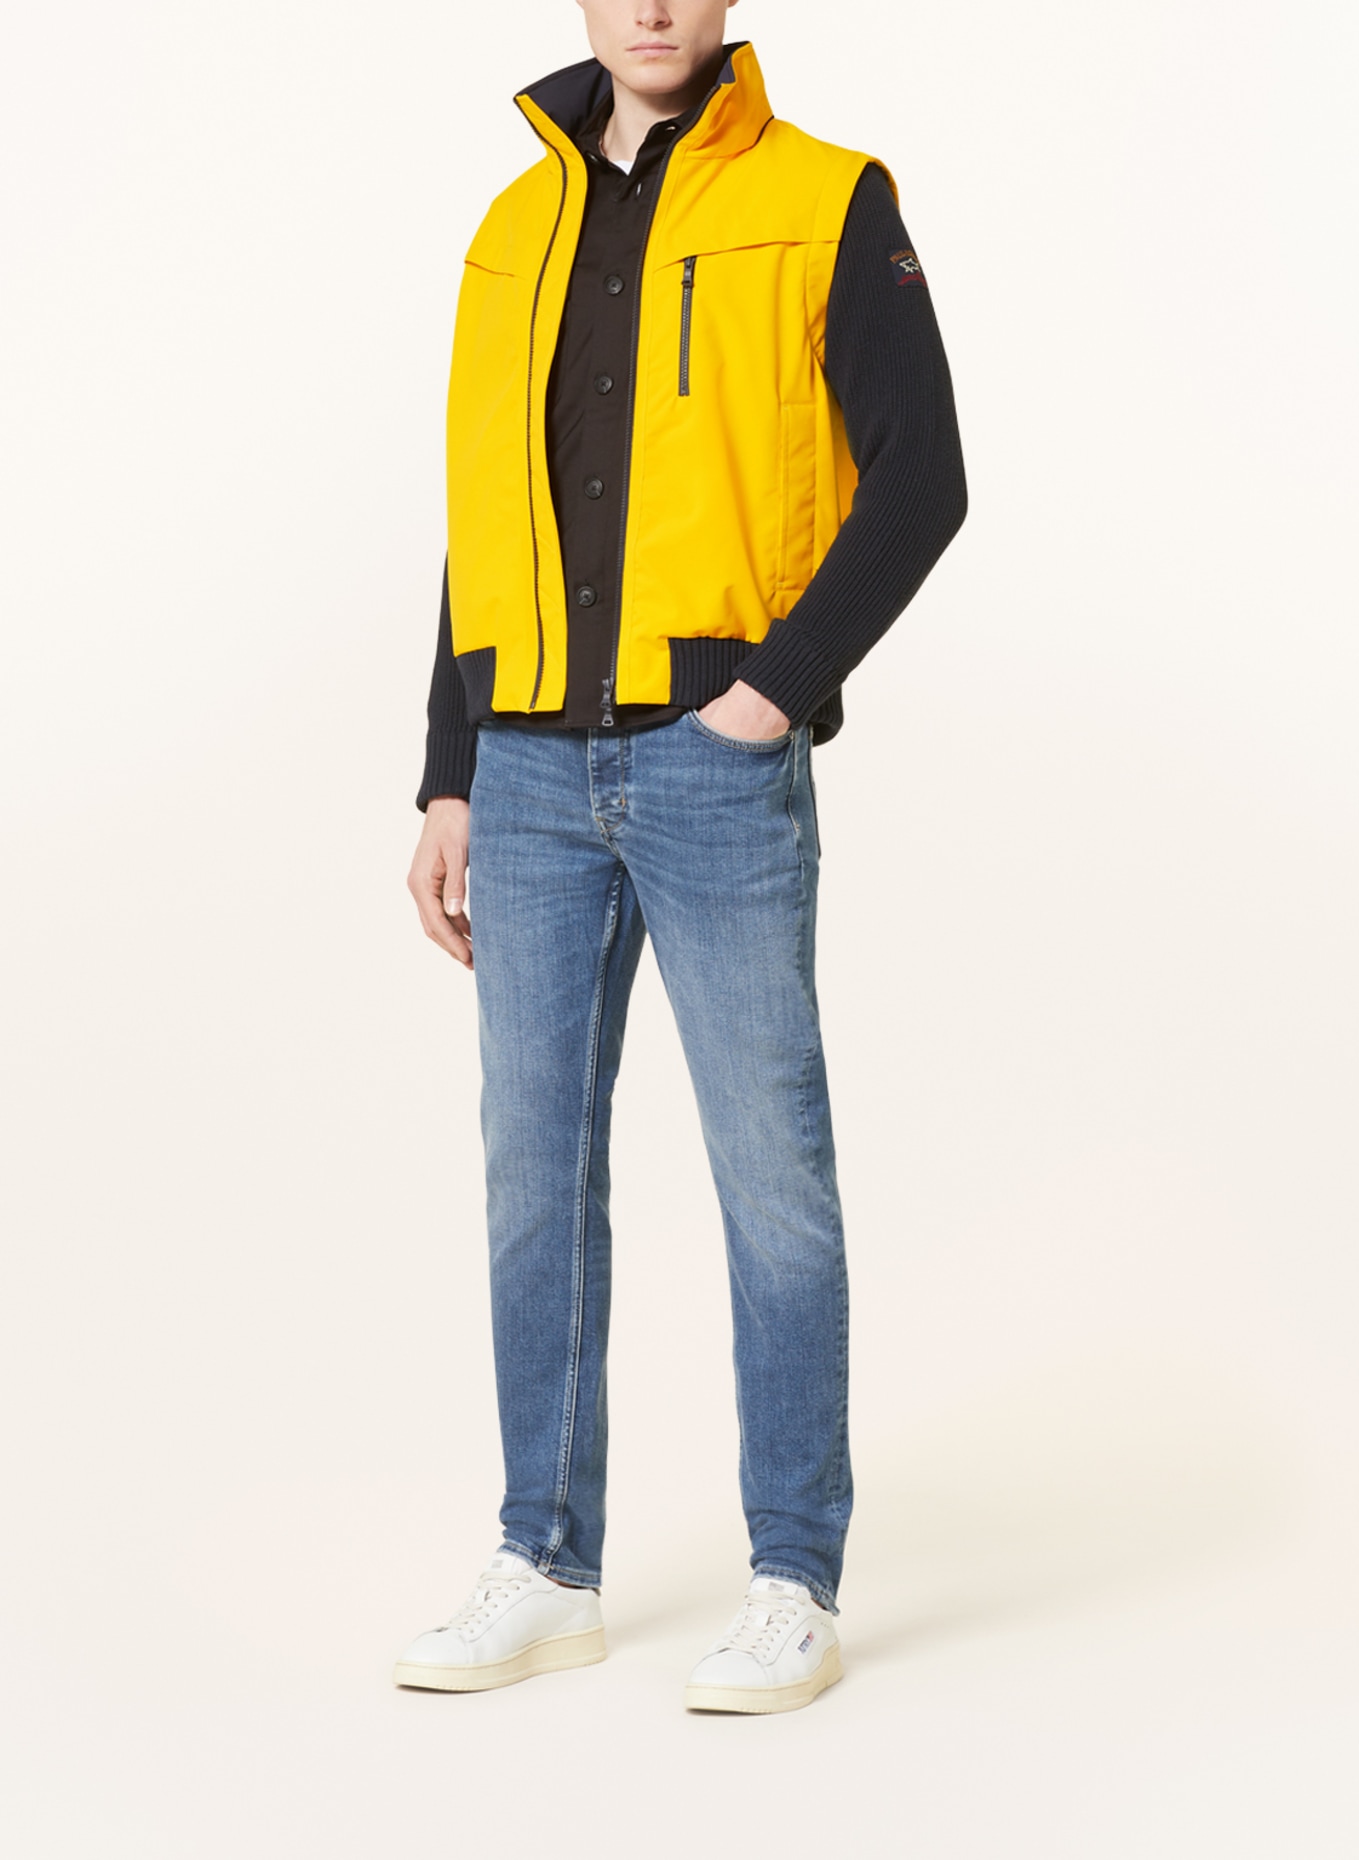 PAUL & SHARK Jacke im Materialmix mit abnehmbaren Ärmeln, Farbe: DUNKELGELB/ DUNKELBLAU (Bild 2)